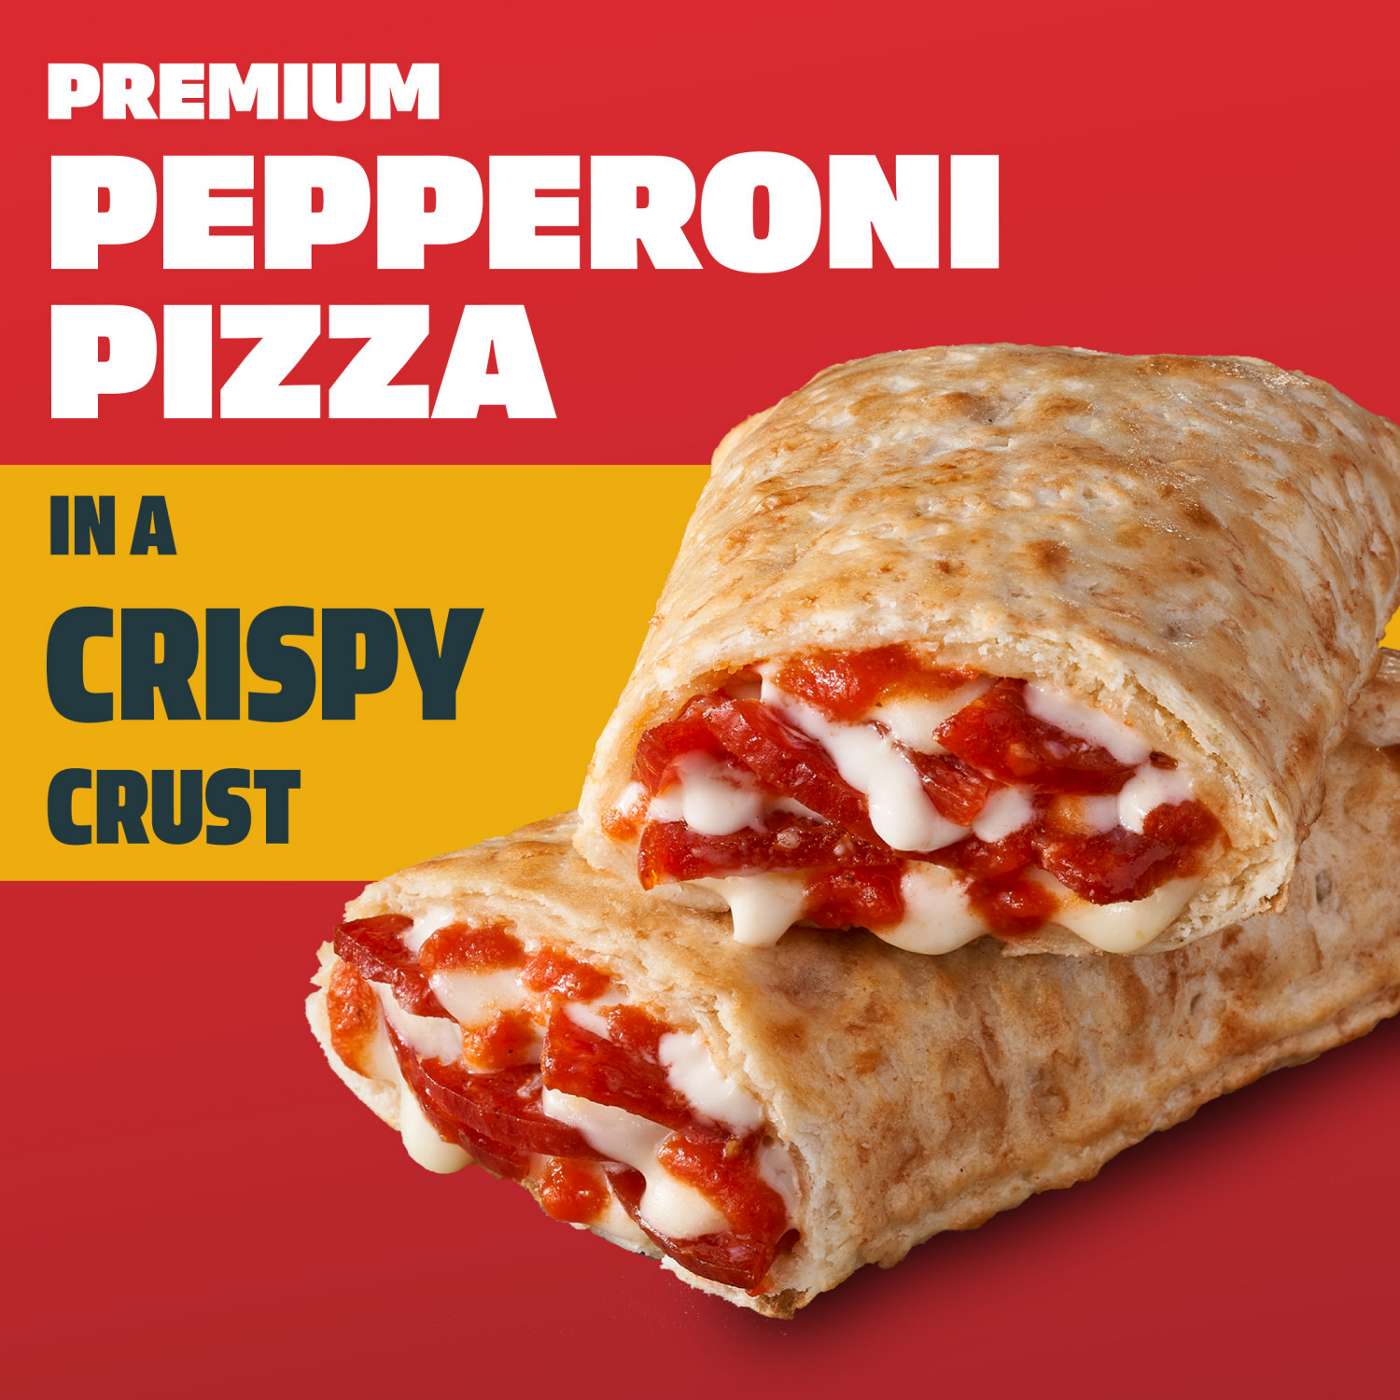 Hot Pockets Pepperoni Pizza Frozen Sandwiches - Crispy Crust; image 7 of 7